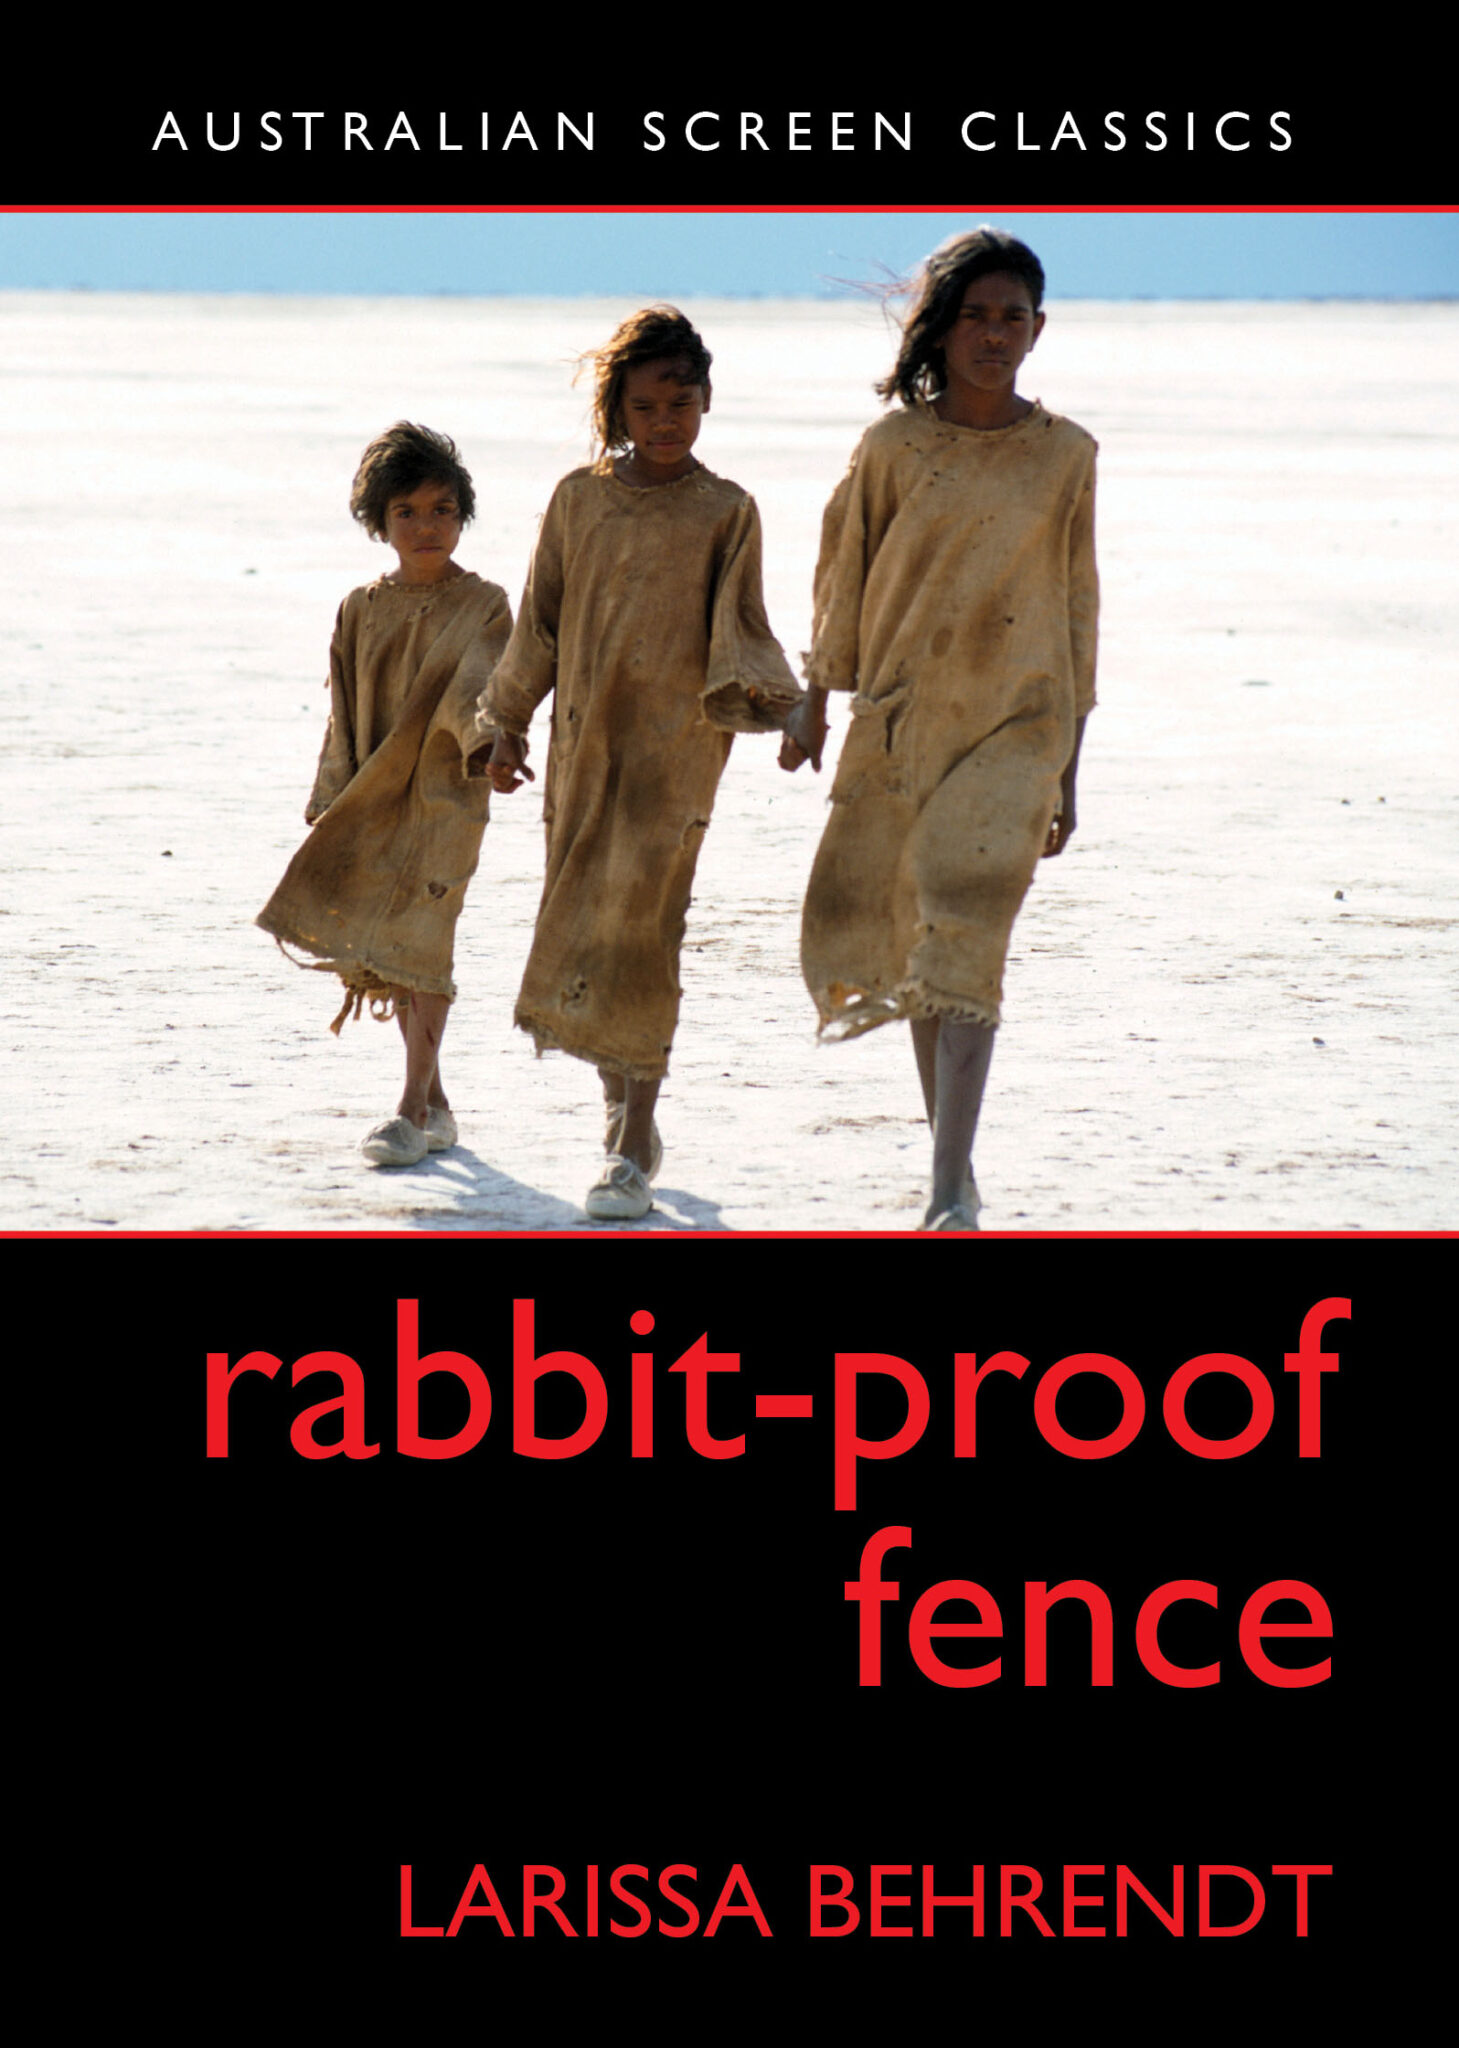 doris pilkington garimara follow the rabbit proof fence